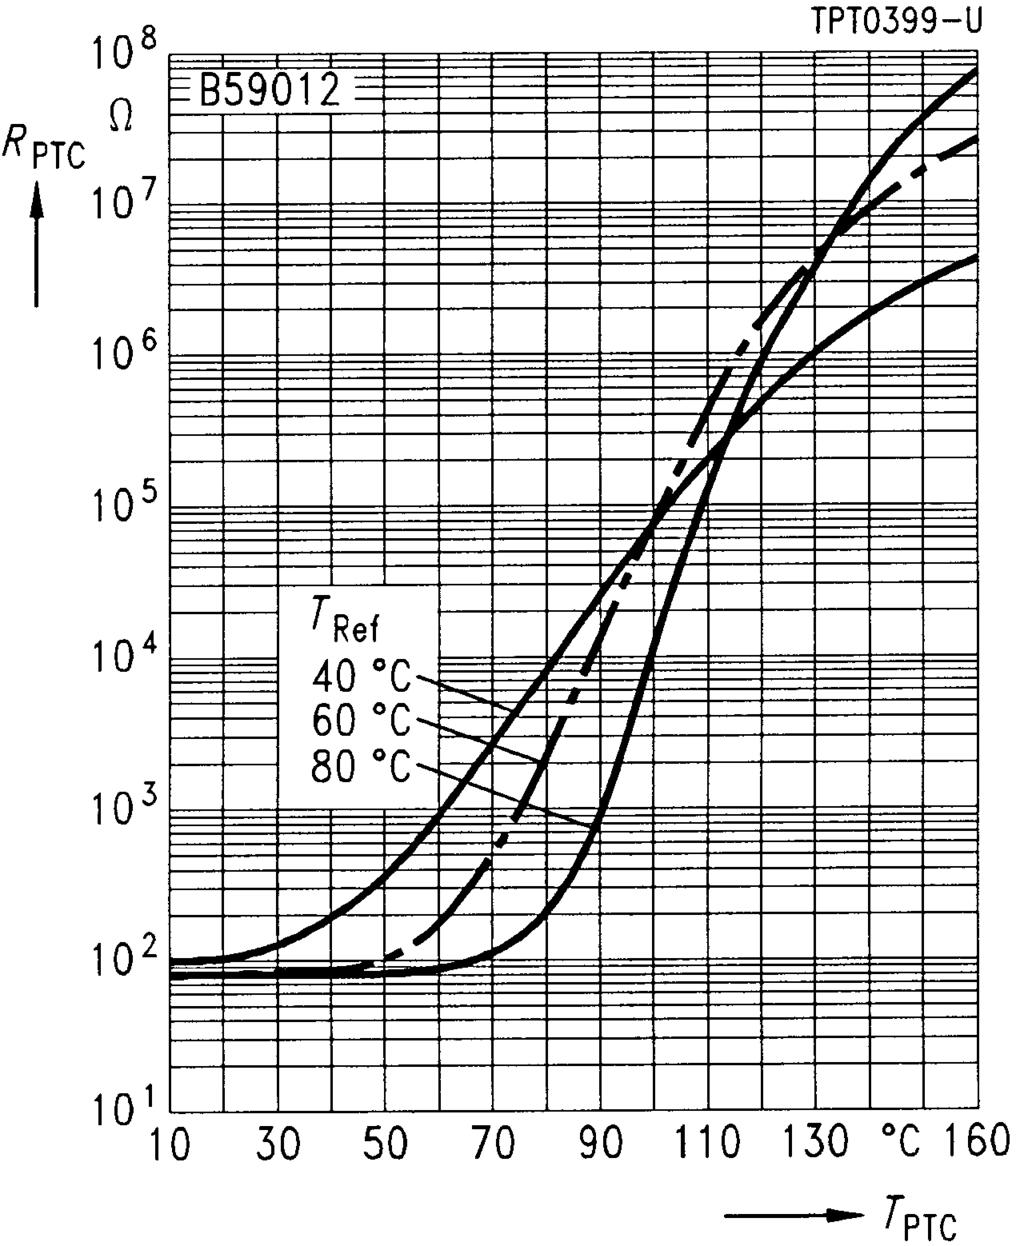 B59012 C 1012 Characteristics (typical) PTC resistance R PTC versus PTC temperature T PTC (measured at low